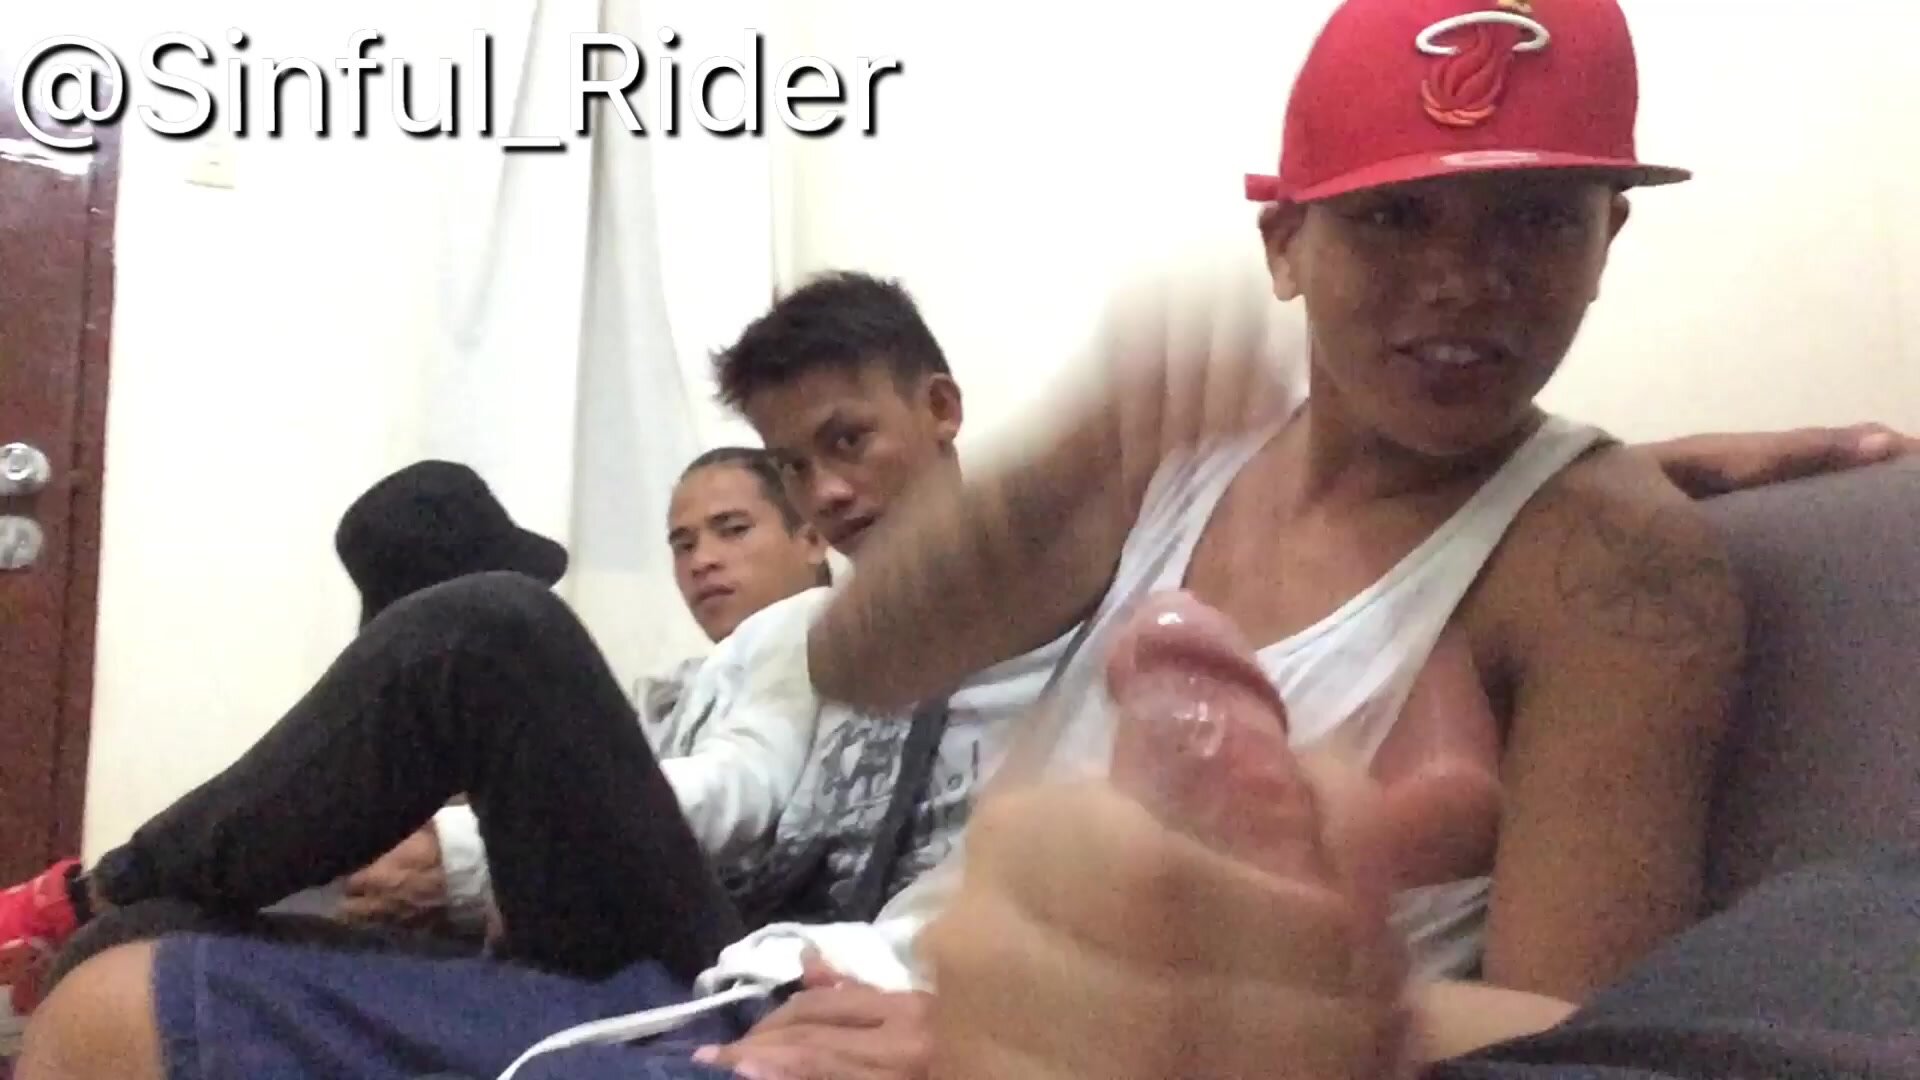 Sinful_rider